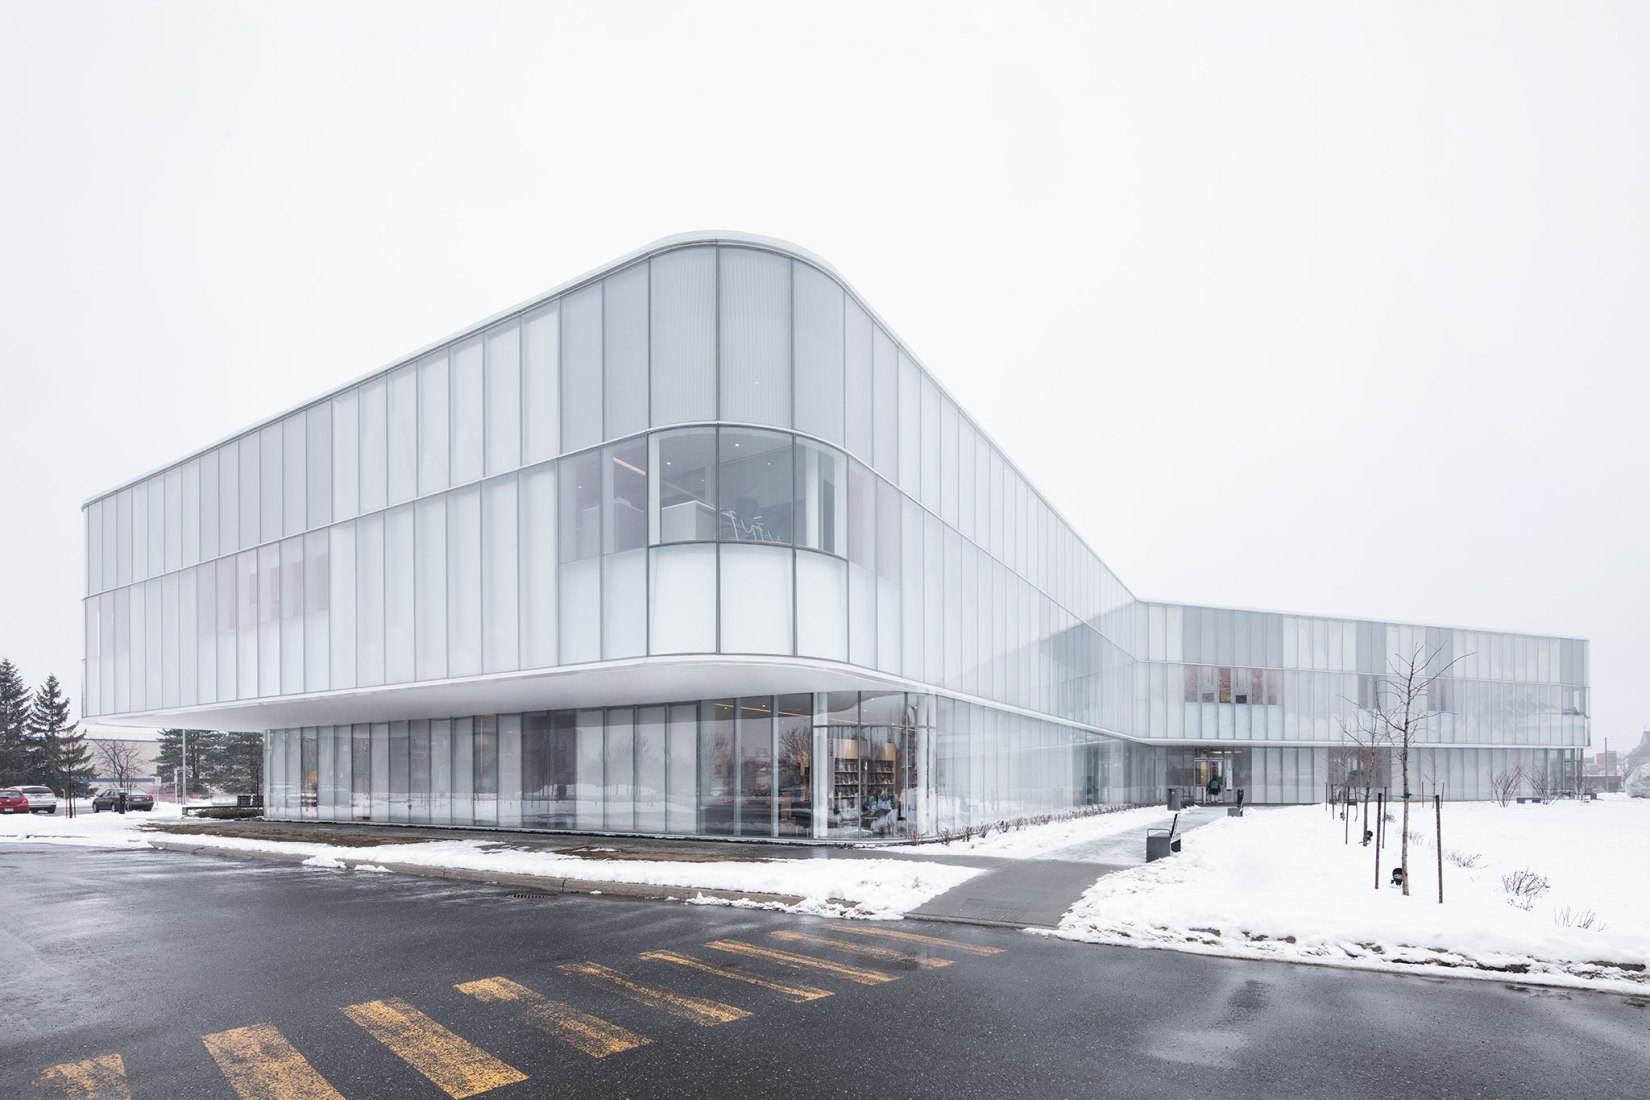 Drummondville Public Library by Chevalier Morales Architectes, DMA architectes. Photograph by Adrien Williams